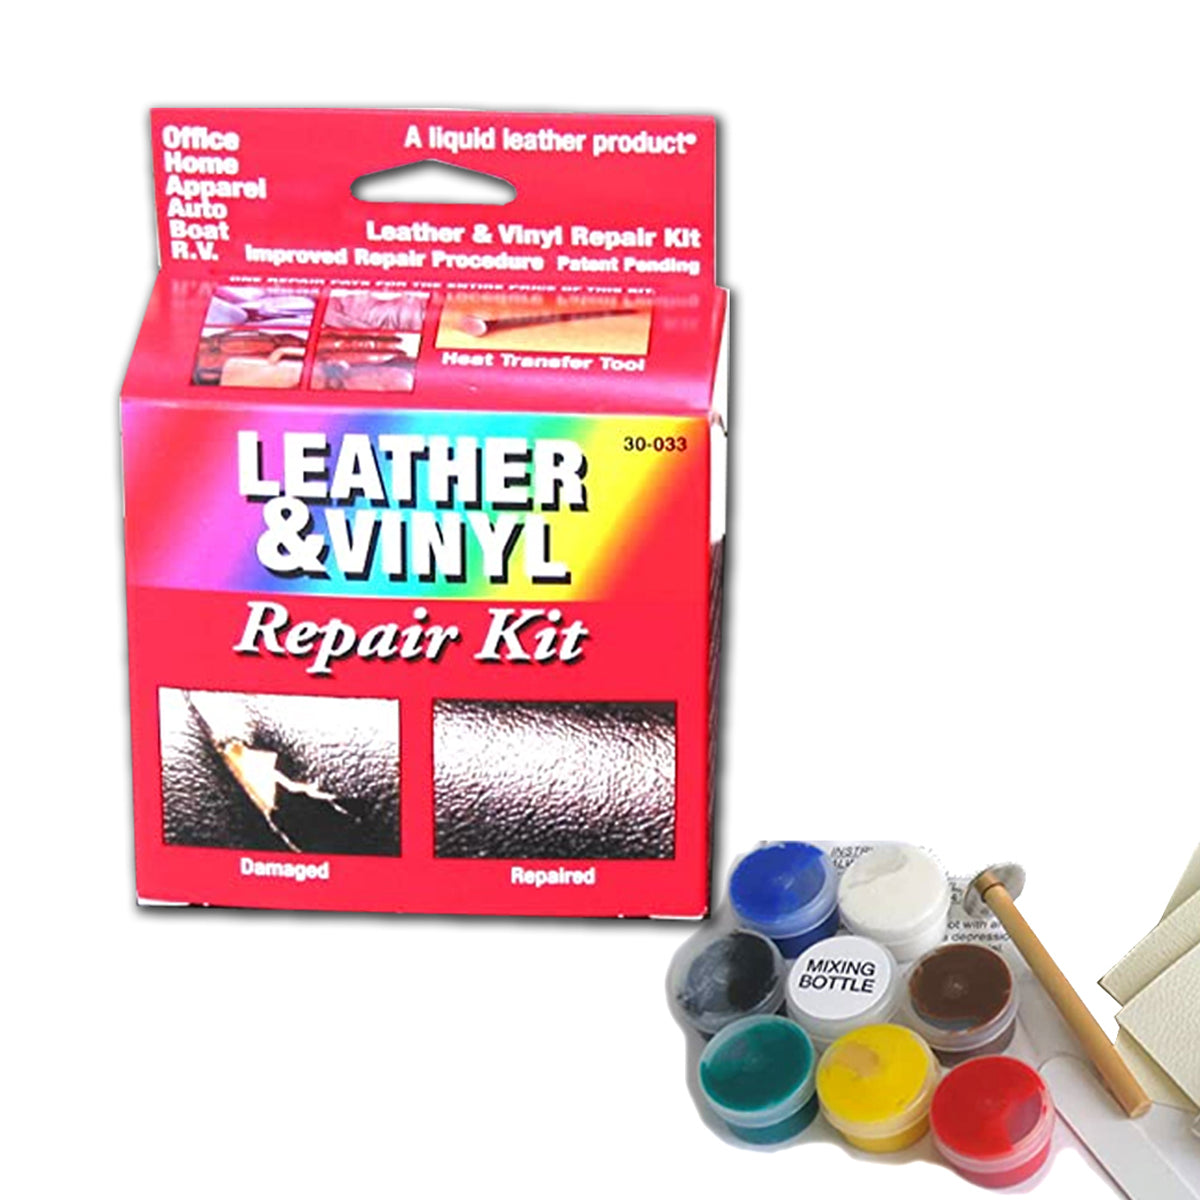 Liquid Leather Air-Dry Repair Kit (30-123) - Repair Tears, Cuts, Burns - 7  Color Options - Special Tool Included